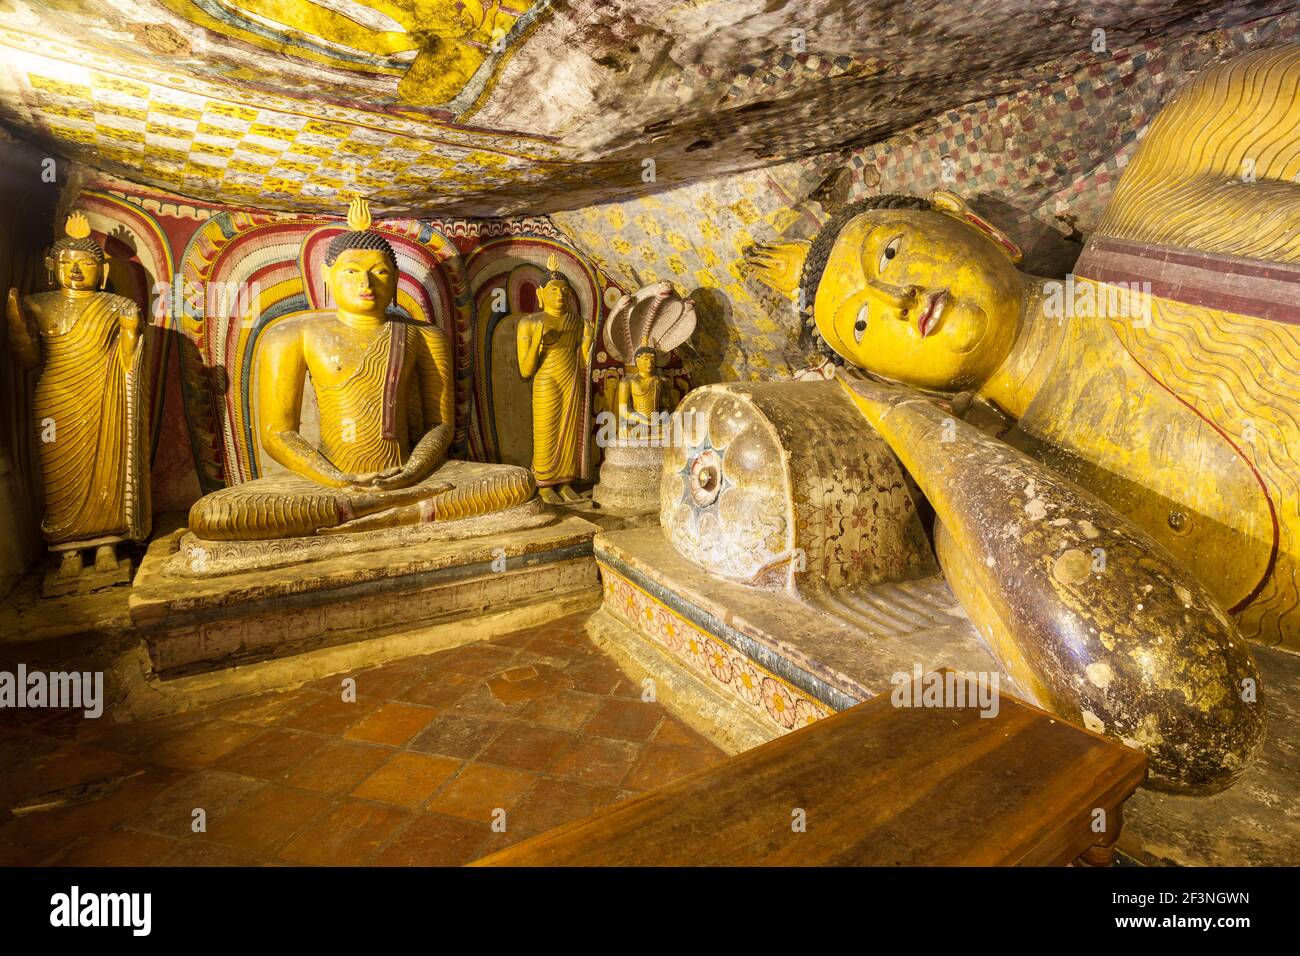 DAMBULLA, SRI LANKA - FEBRUARY 17, 2017: Sculpture of reclining Buddha inside Dambulla Cave Temple. Cave Temple is a World Heritage Site near Dambulla Stock Photo